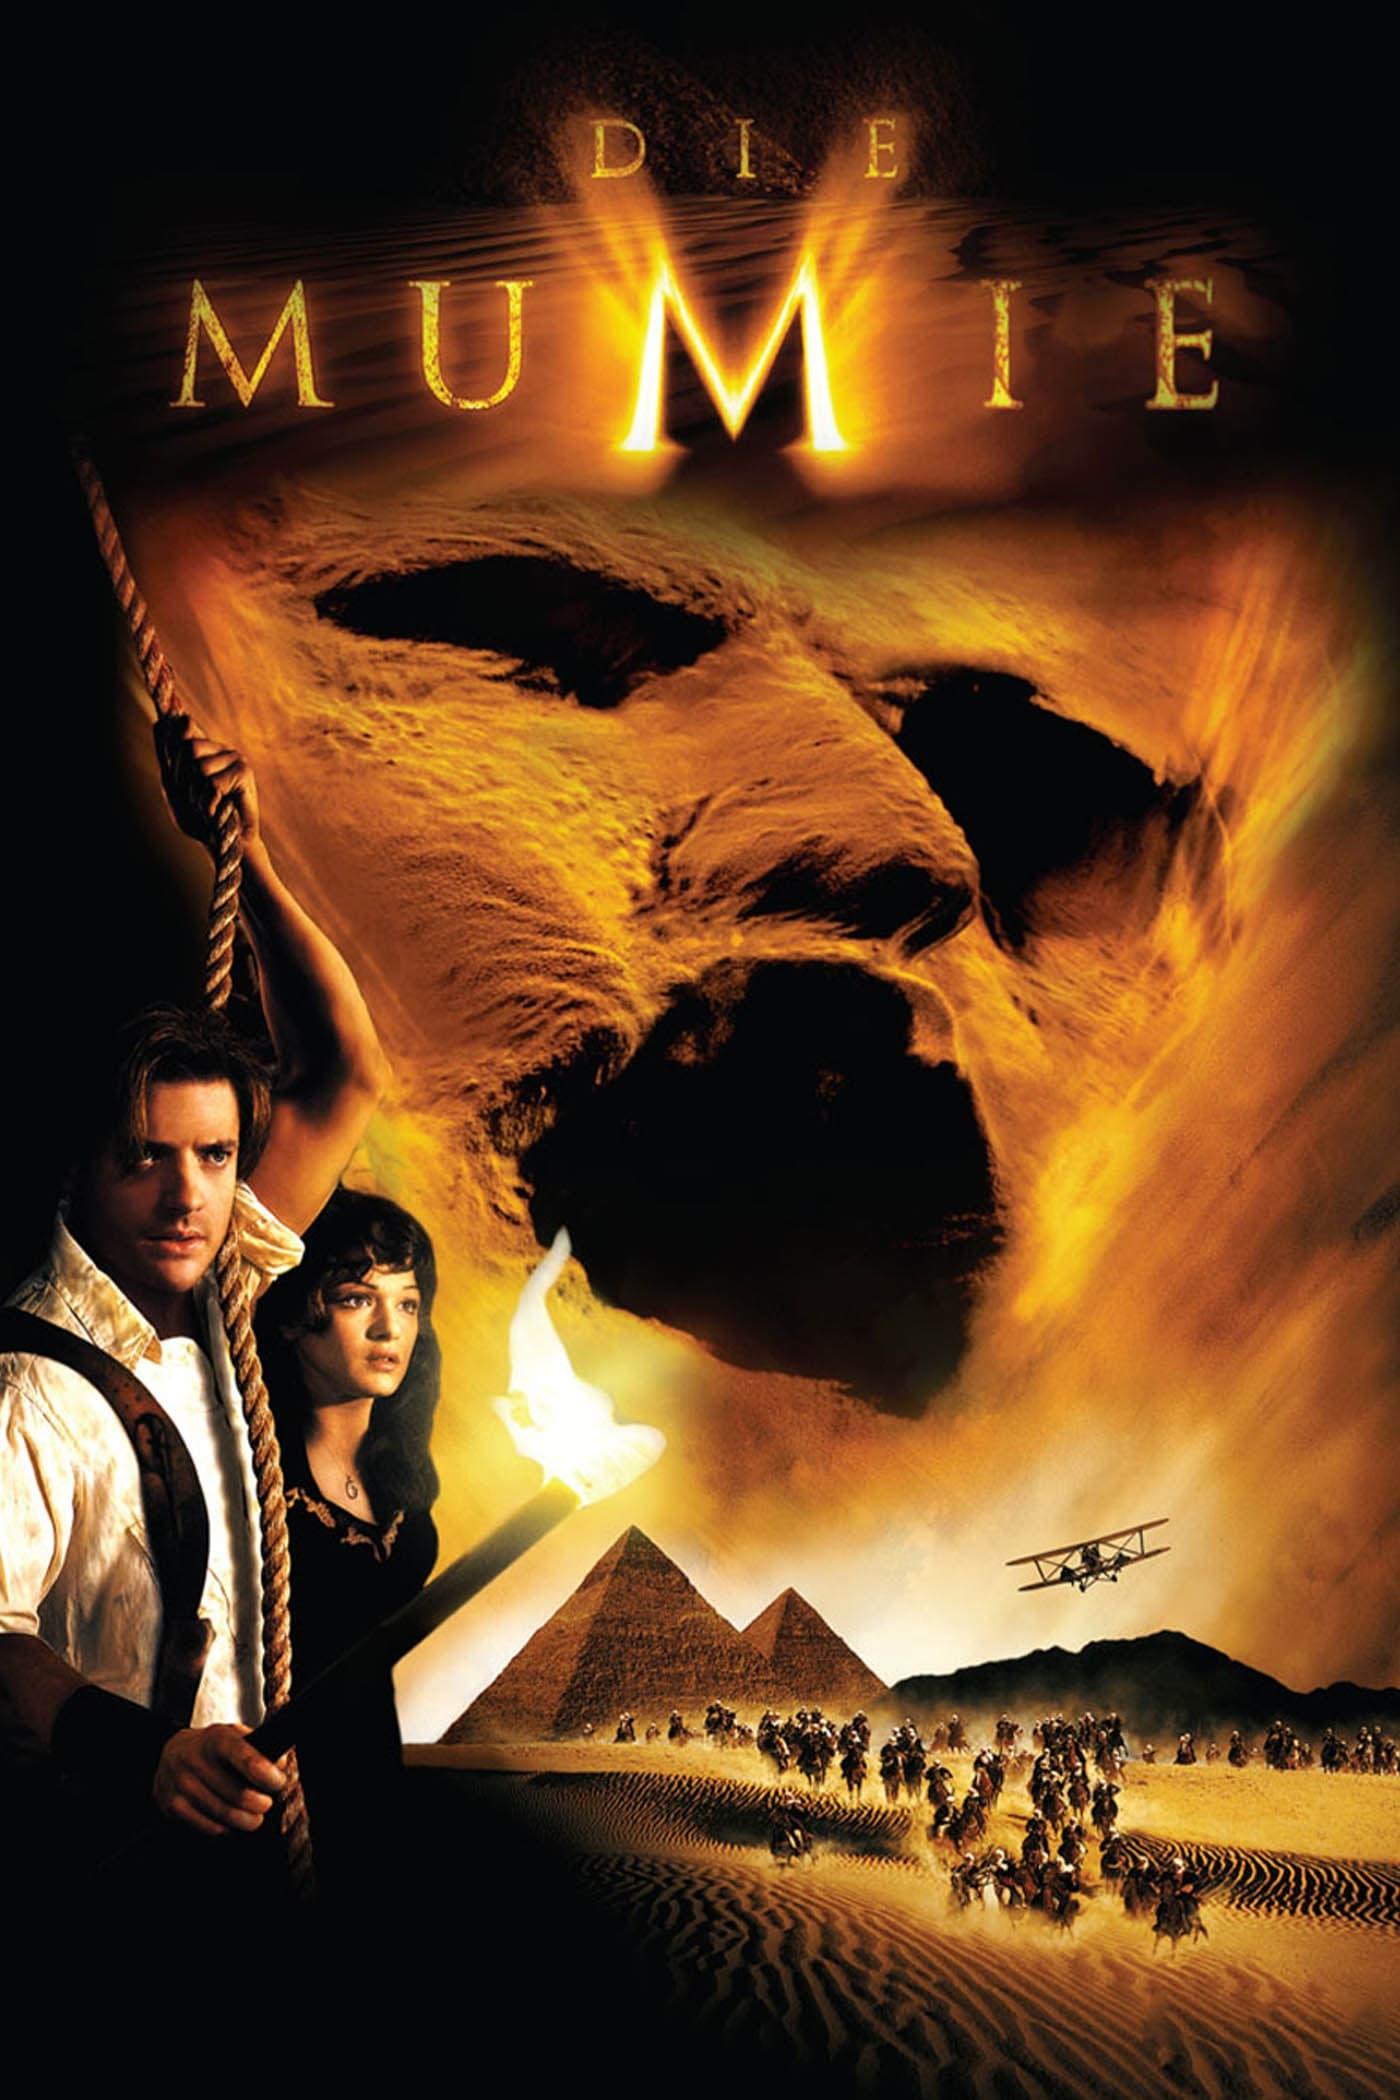 Die Mumie poster